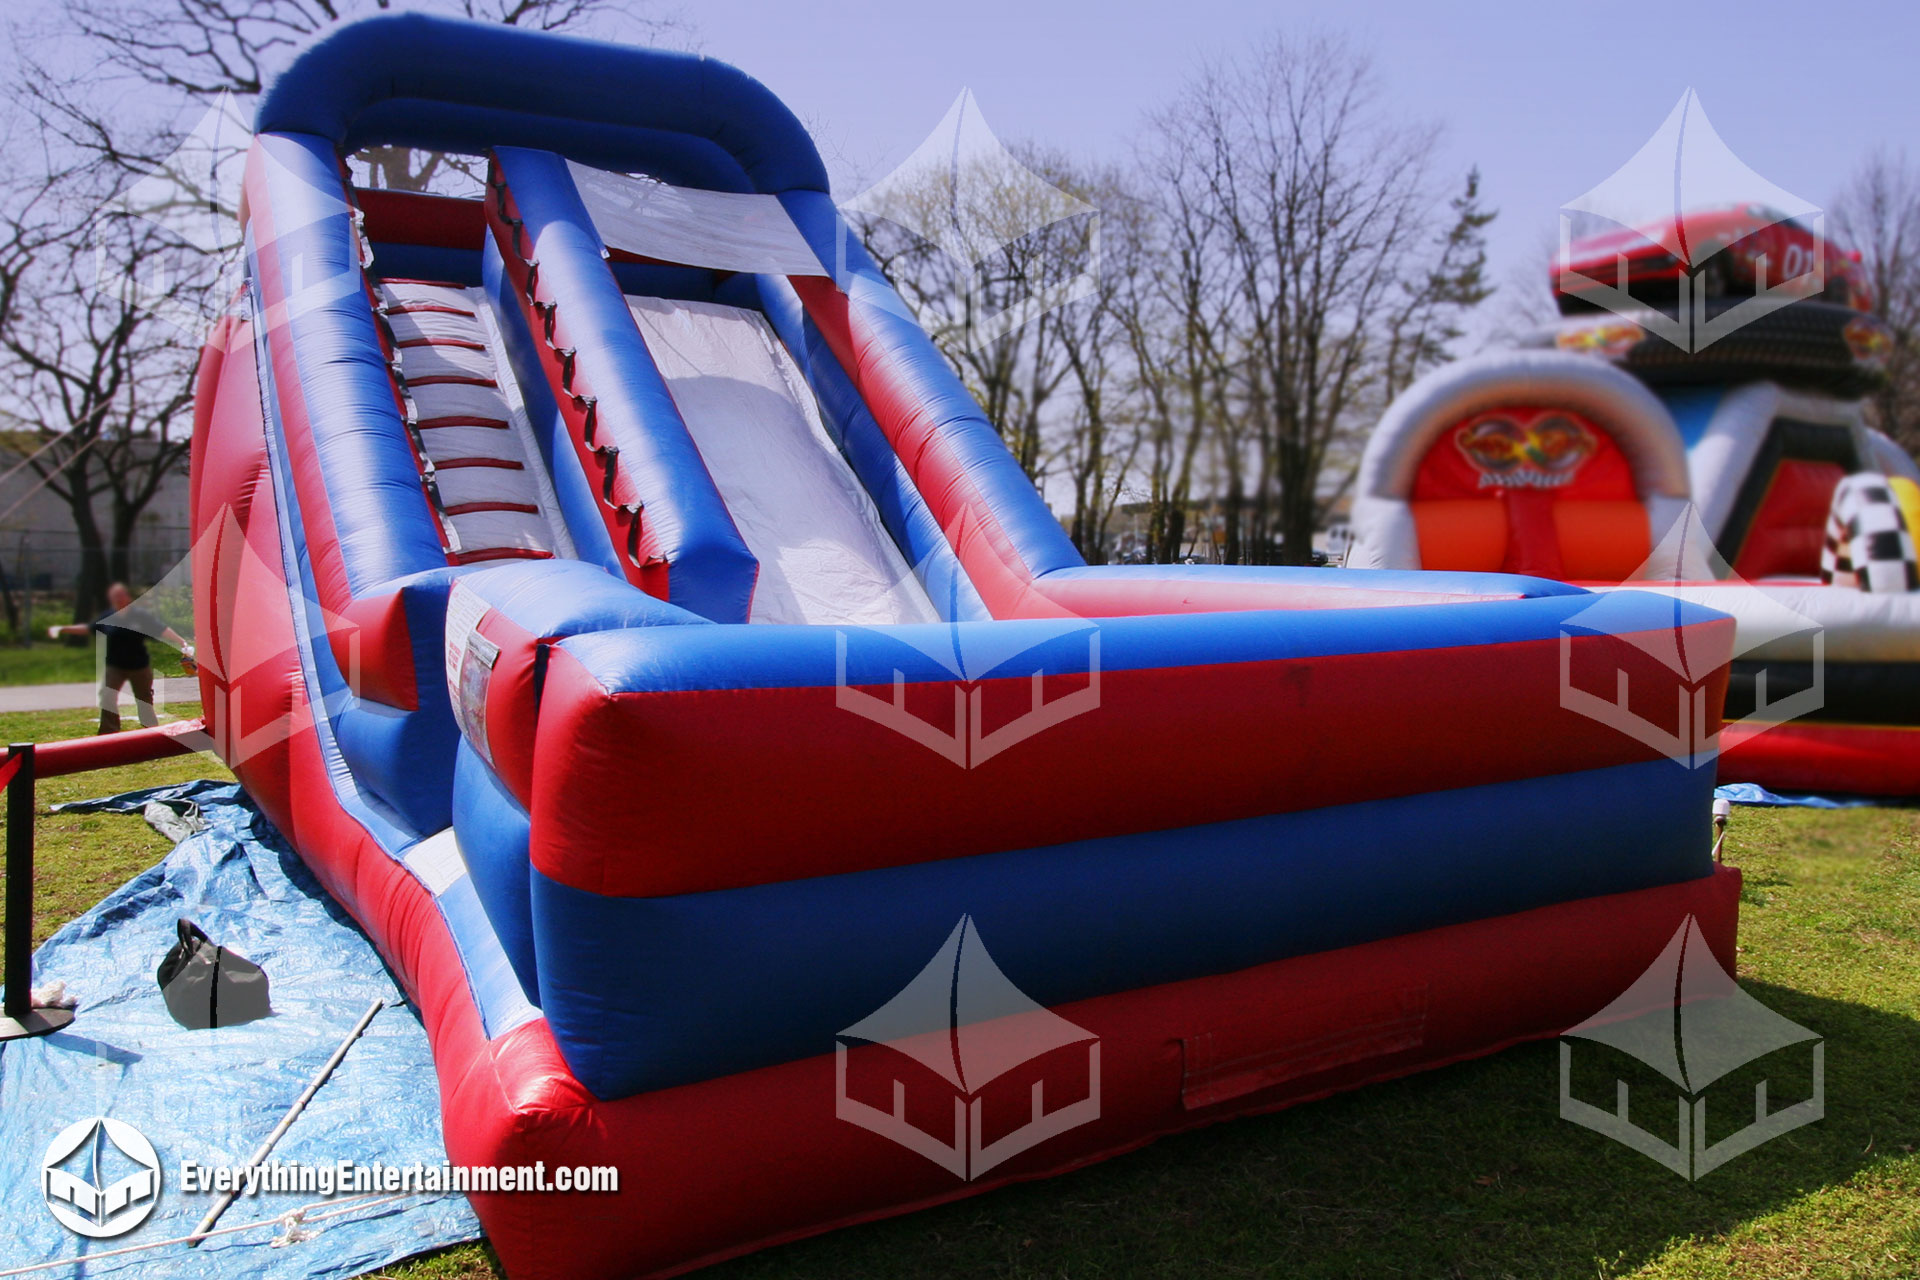  Super Slide Inflatable – Slide into fun!